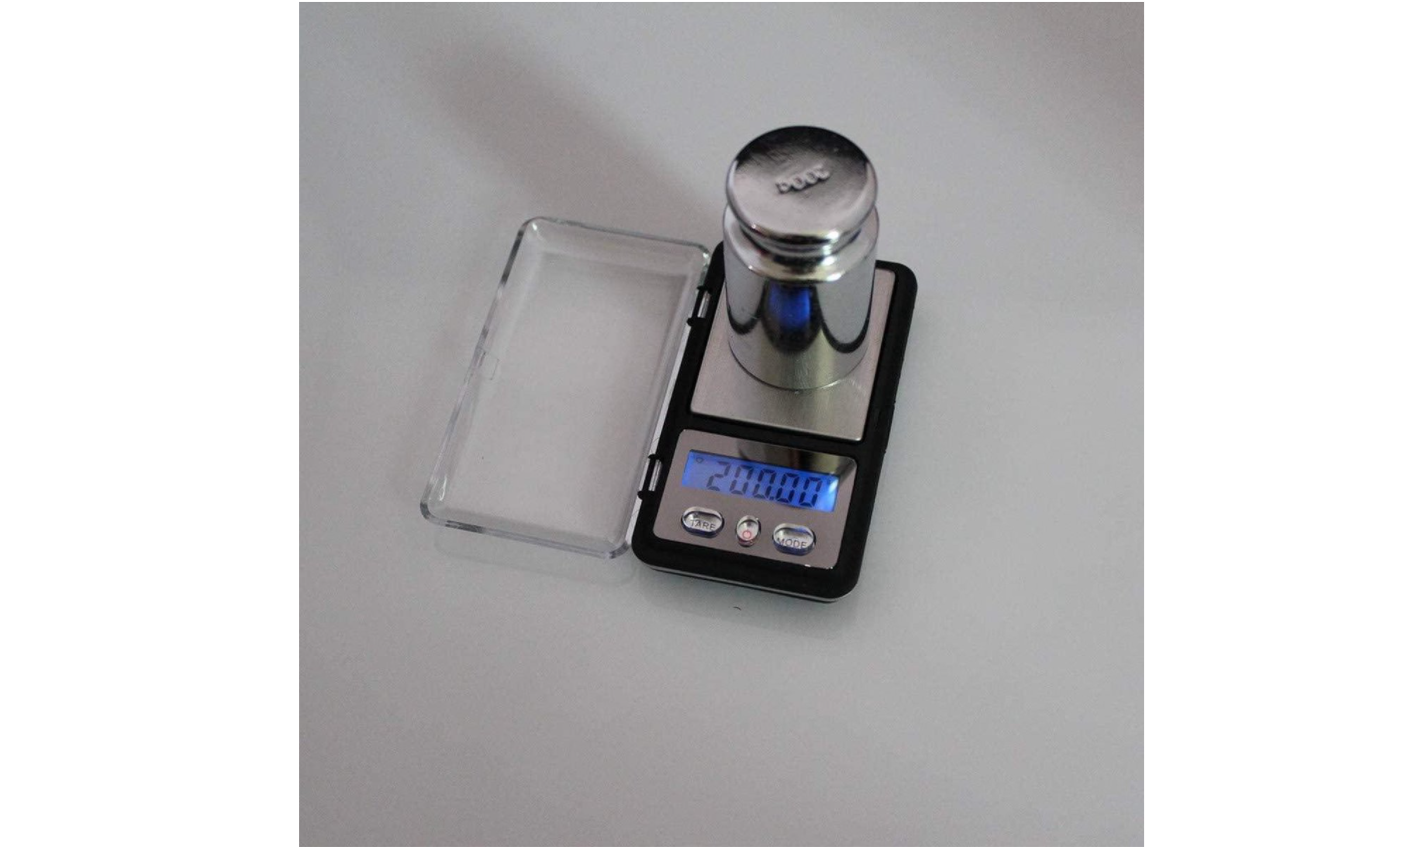 LuxeBass CX-333 Mini Draagbare Pocket Elektronische Weegschaal Precisie Digitale Weegschalen Precisie 200g - 0.01g